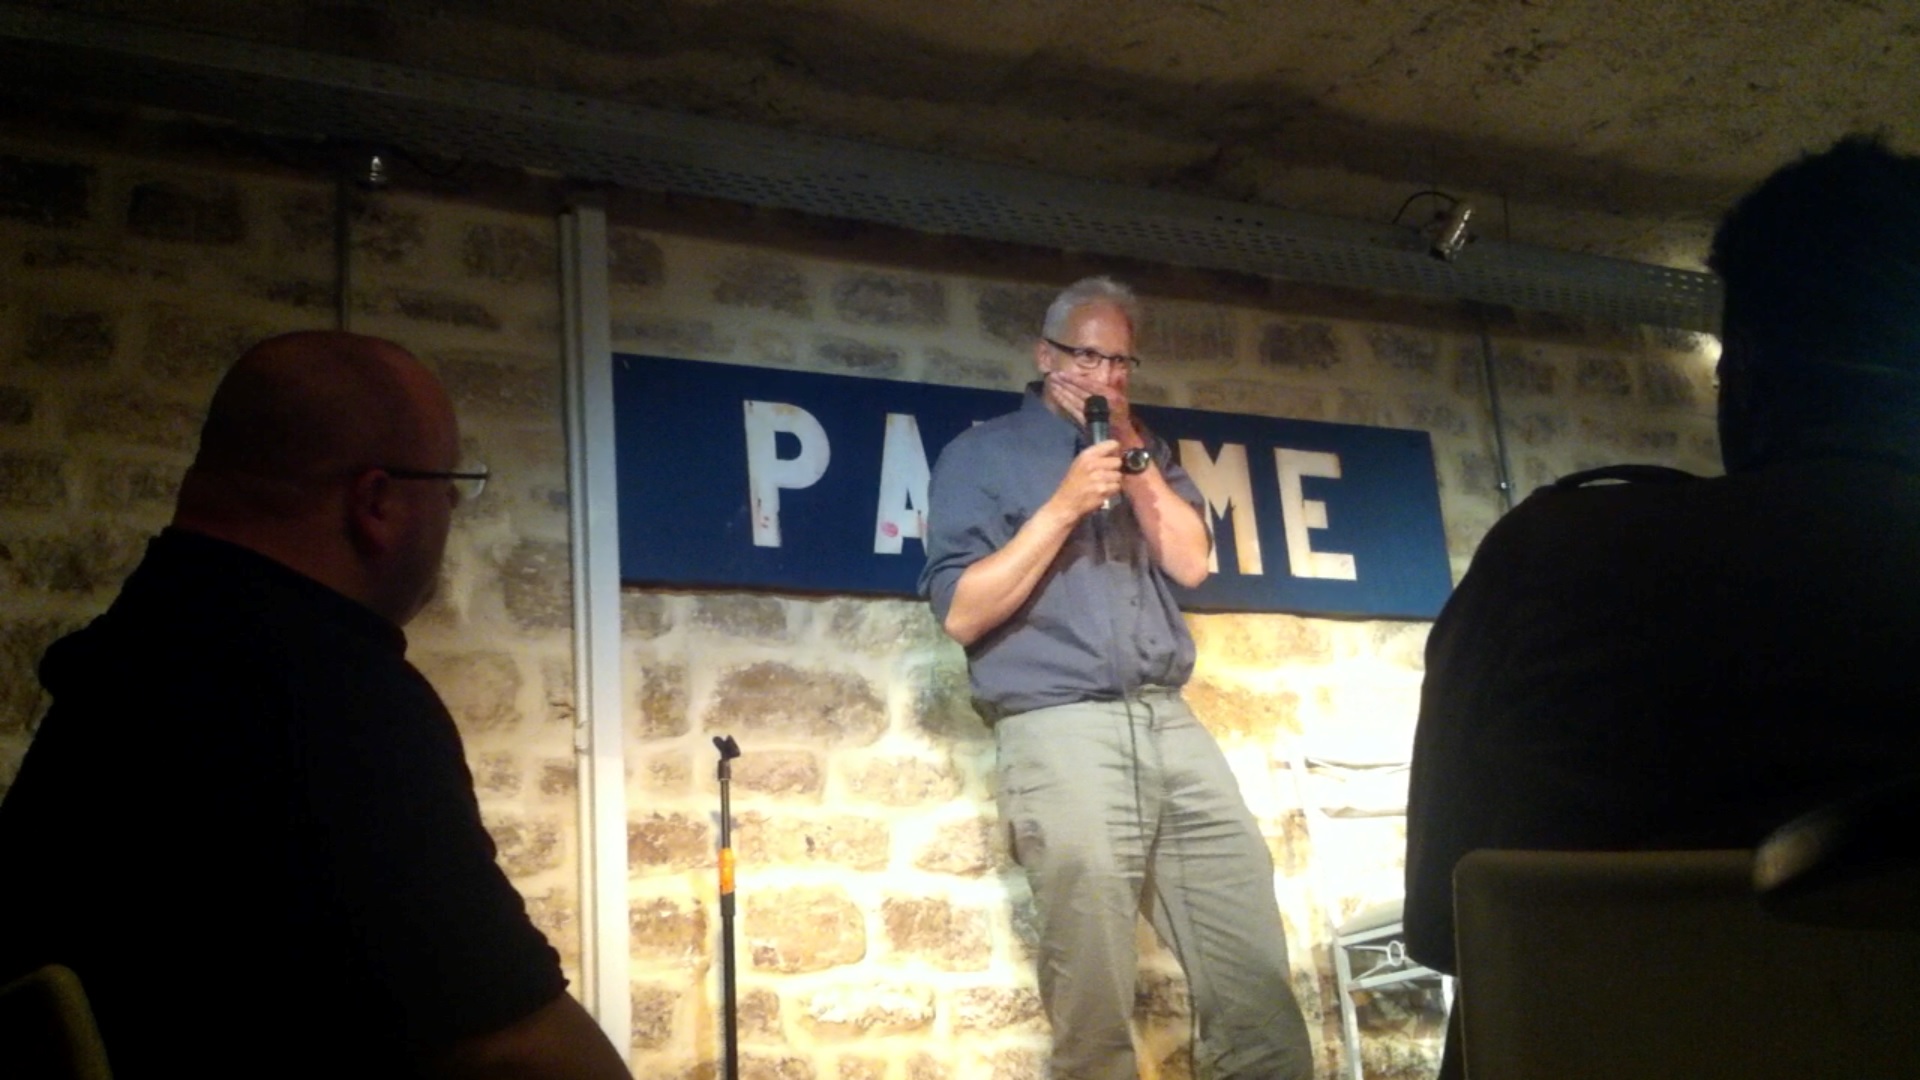 Doing standup at Le Paname club in Paris, France, June 2013